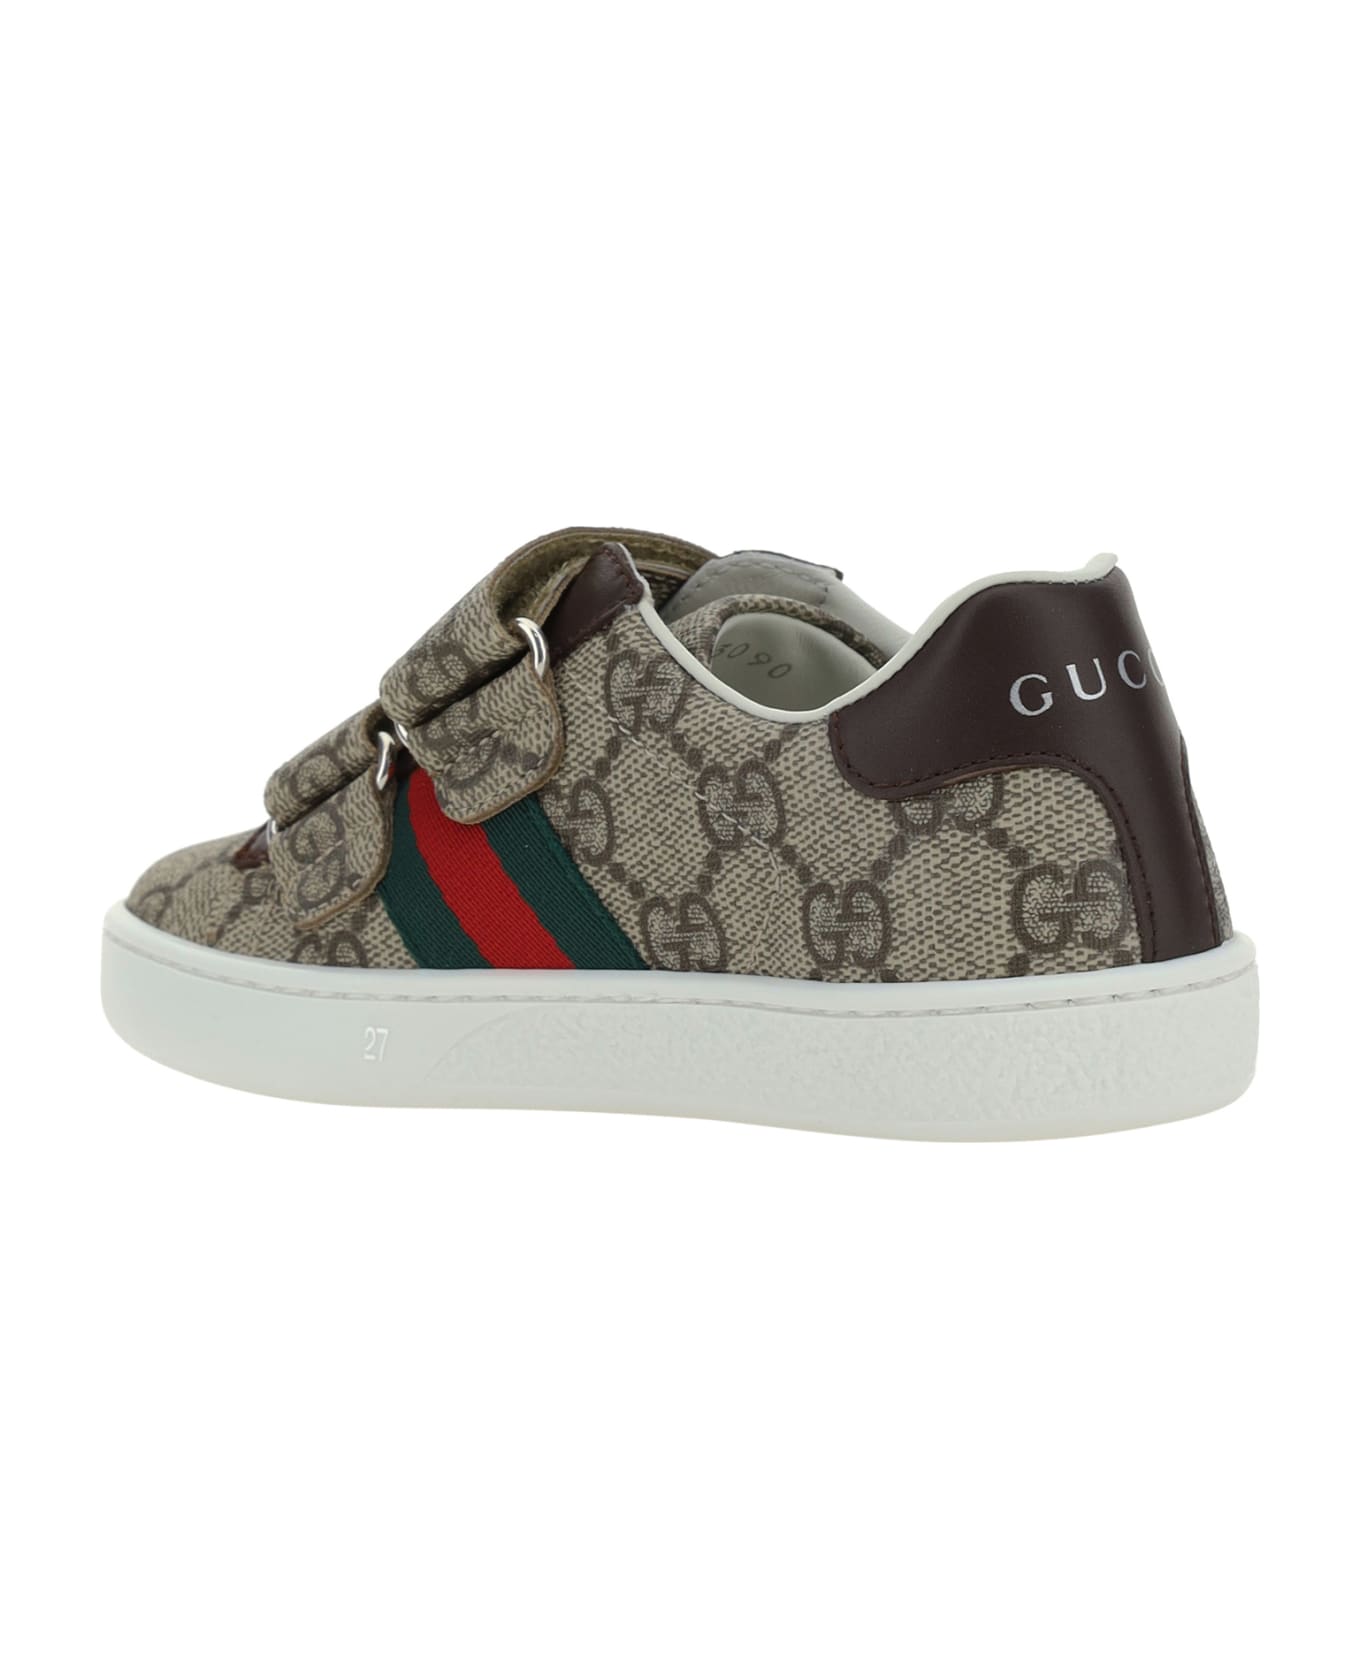 Gucci Sneakers For Boy - Beige シューズ